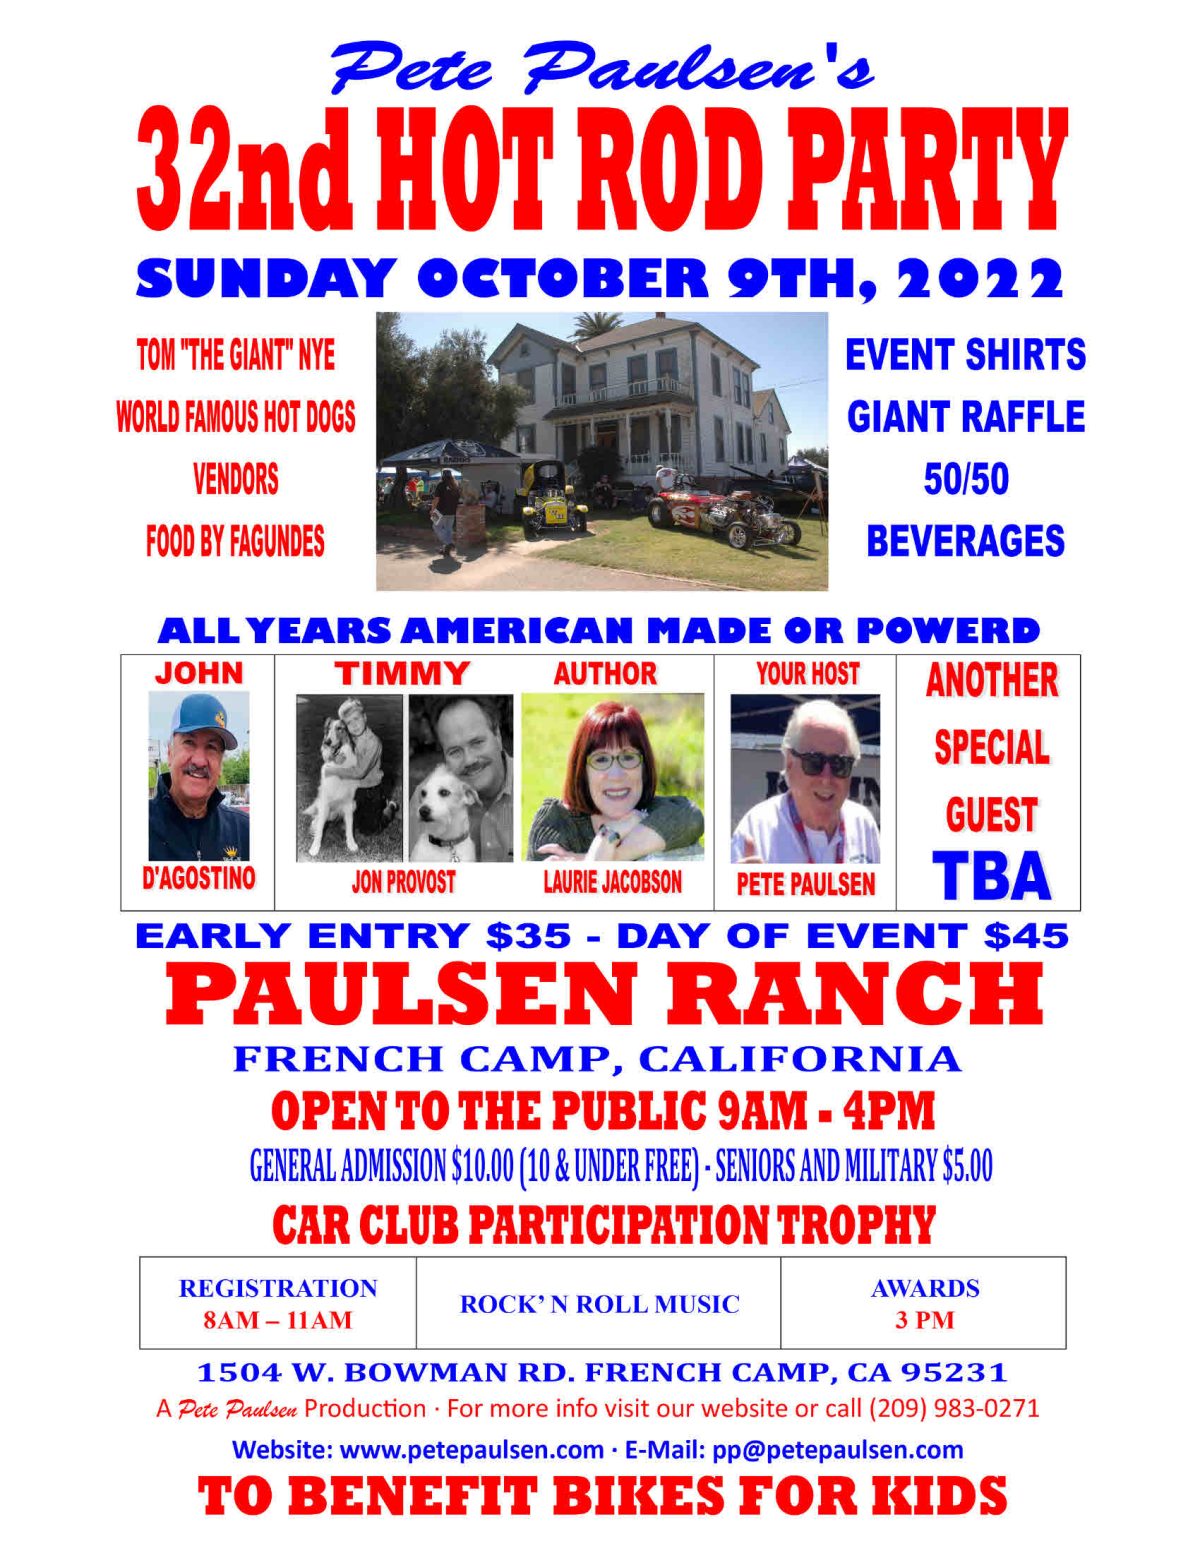 Pete Paulsen’s 32nd Hot Rod Party